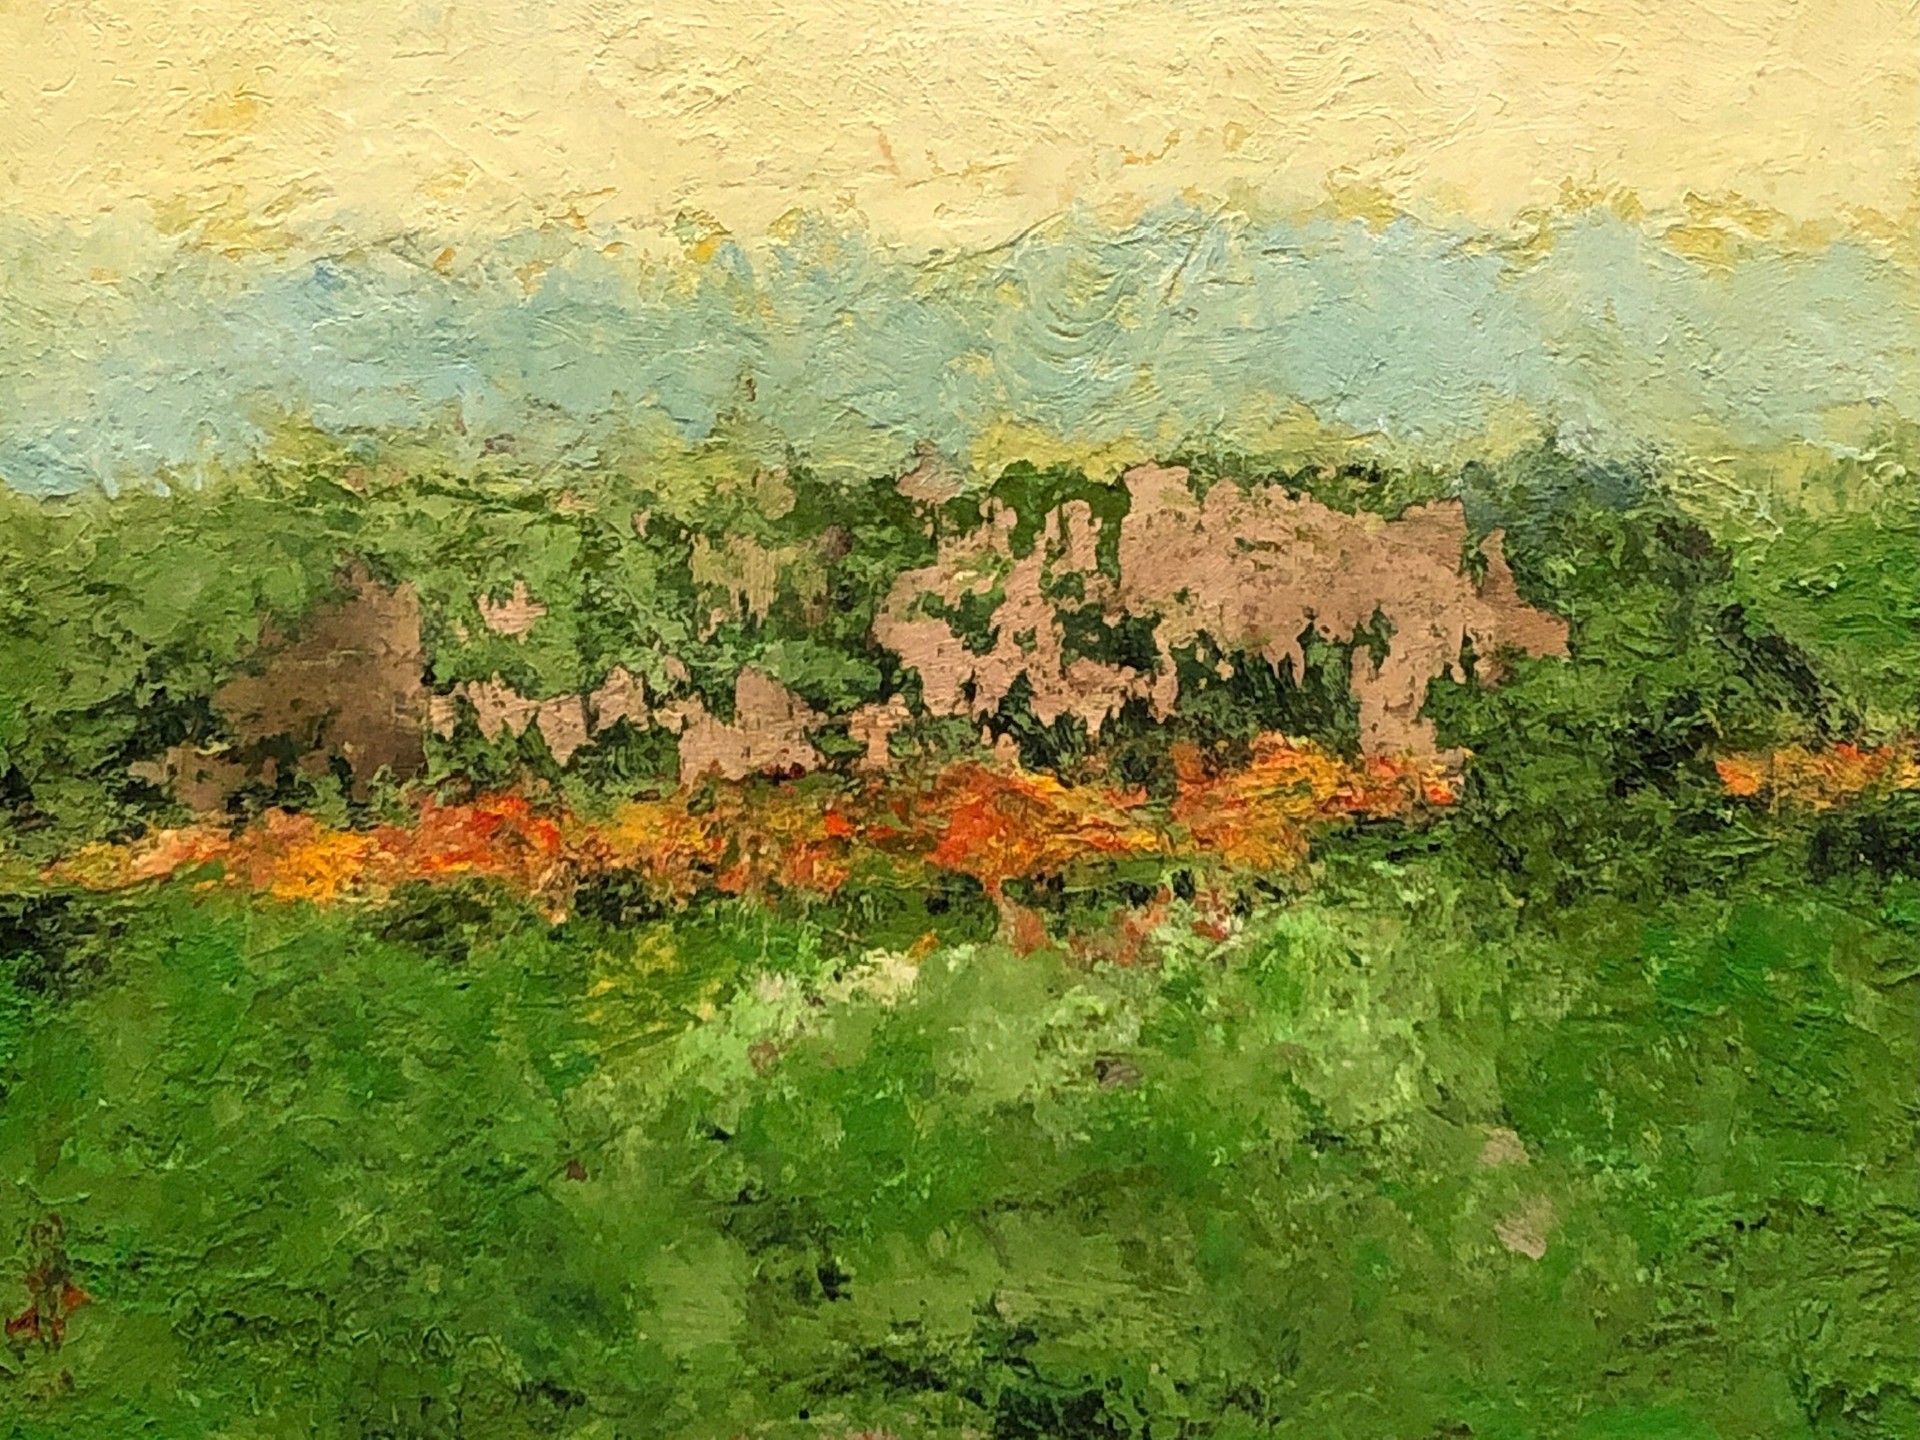 Landscape no. 1, 2021 by John Goodman